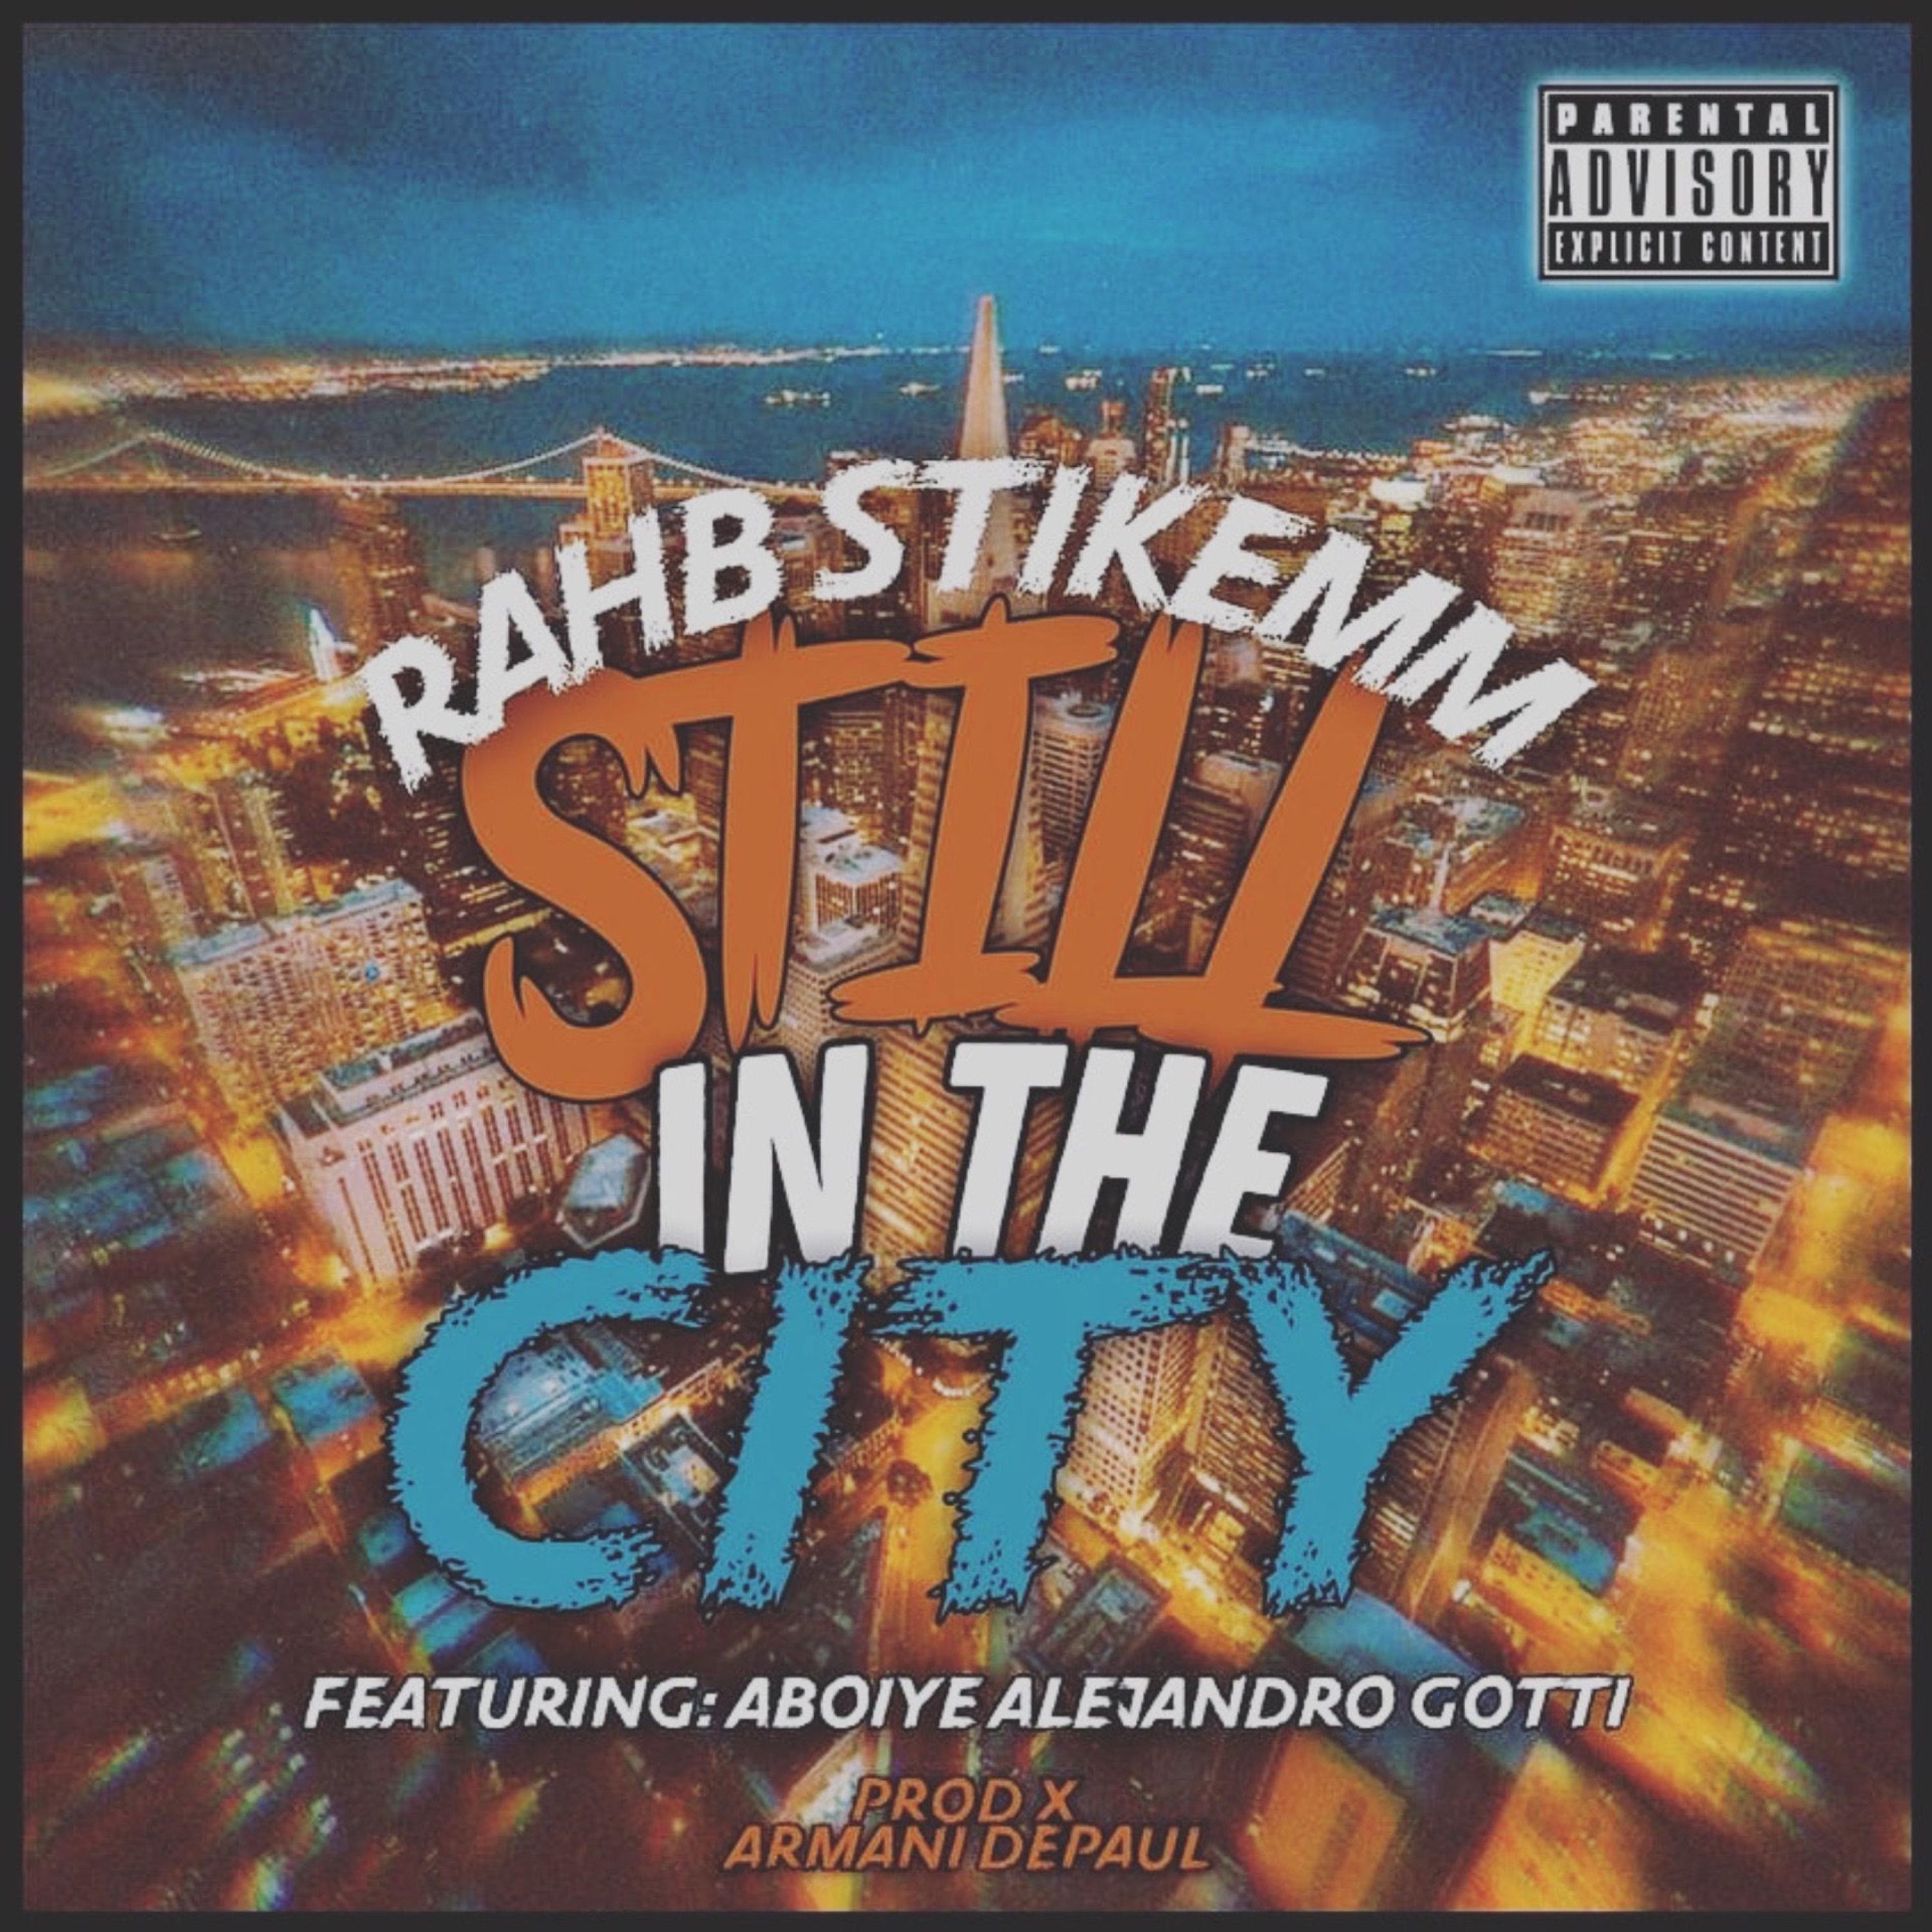 Rahb Stikemm - Still in the city (feat. Abioye Alejandro Gotti)